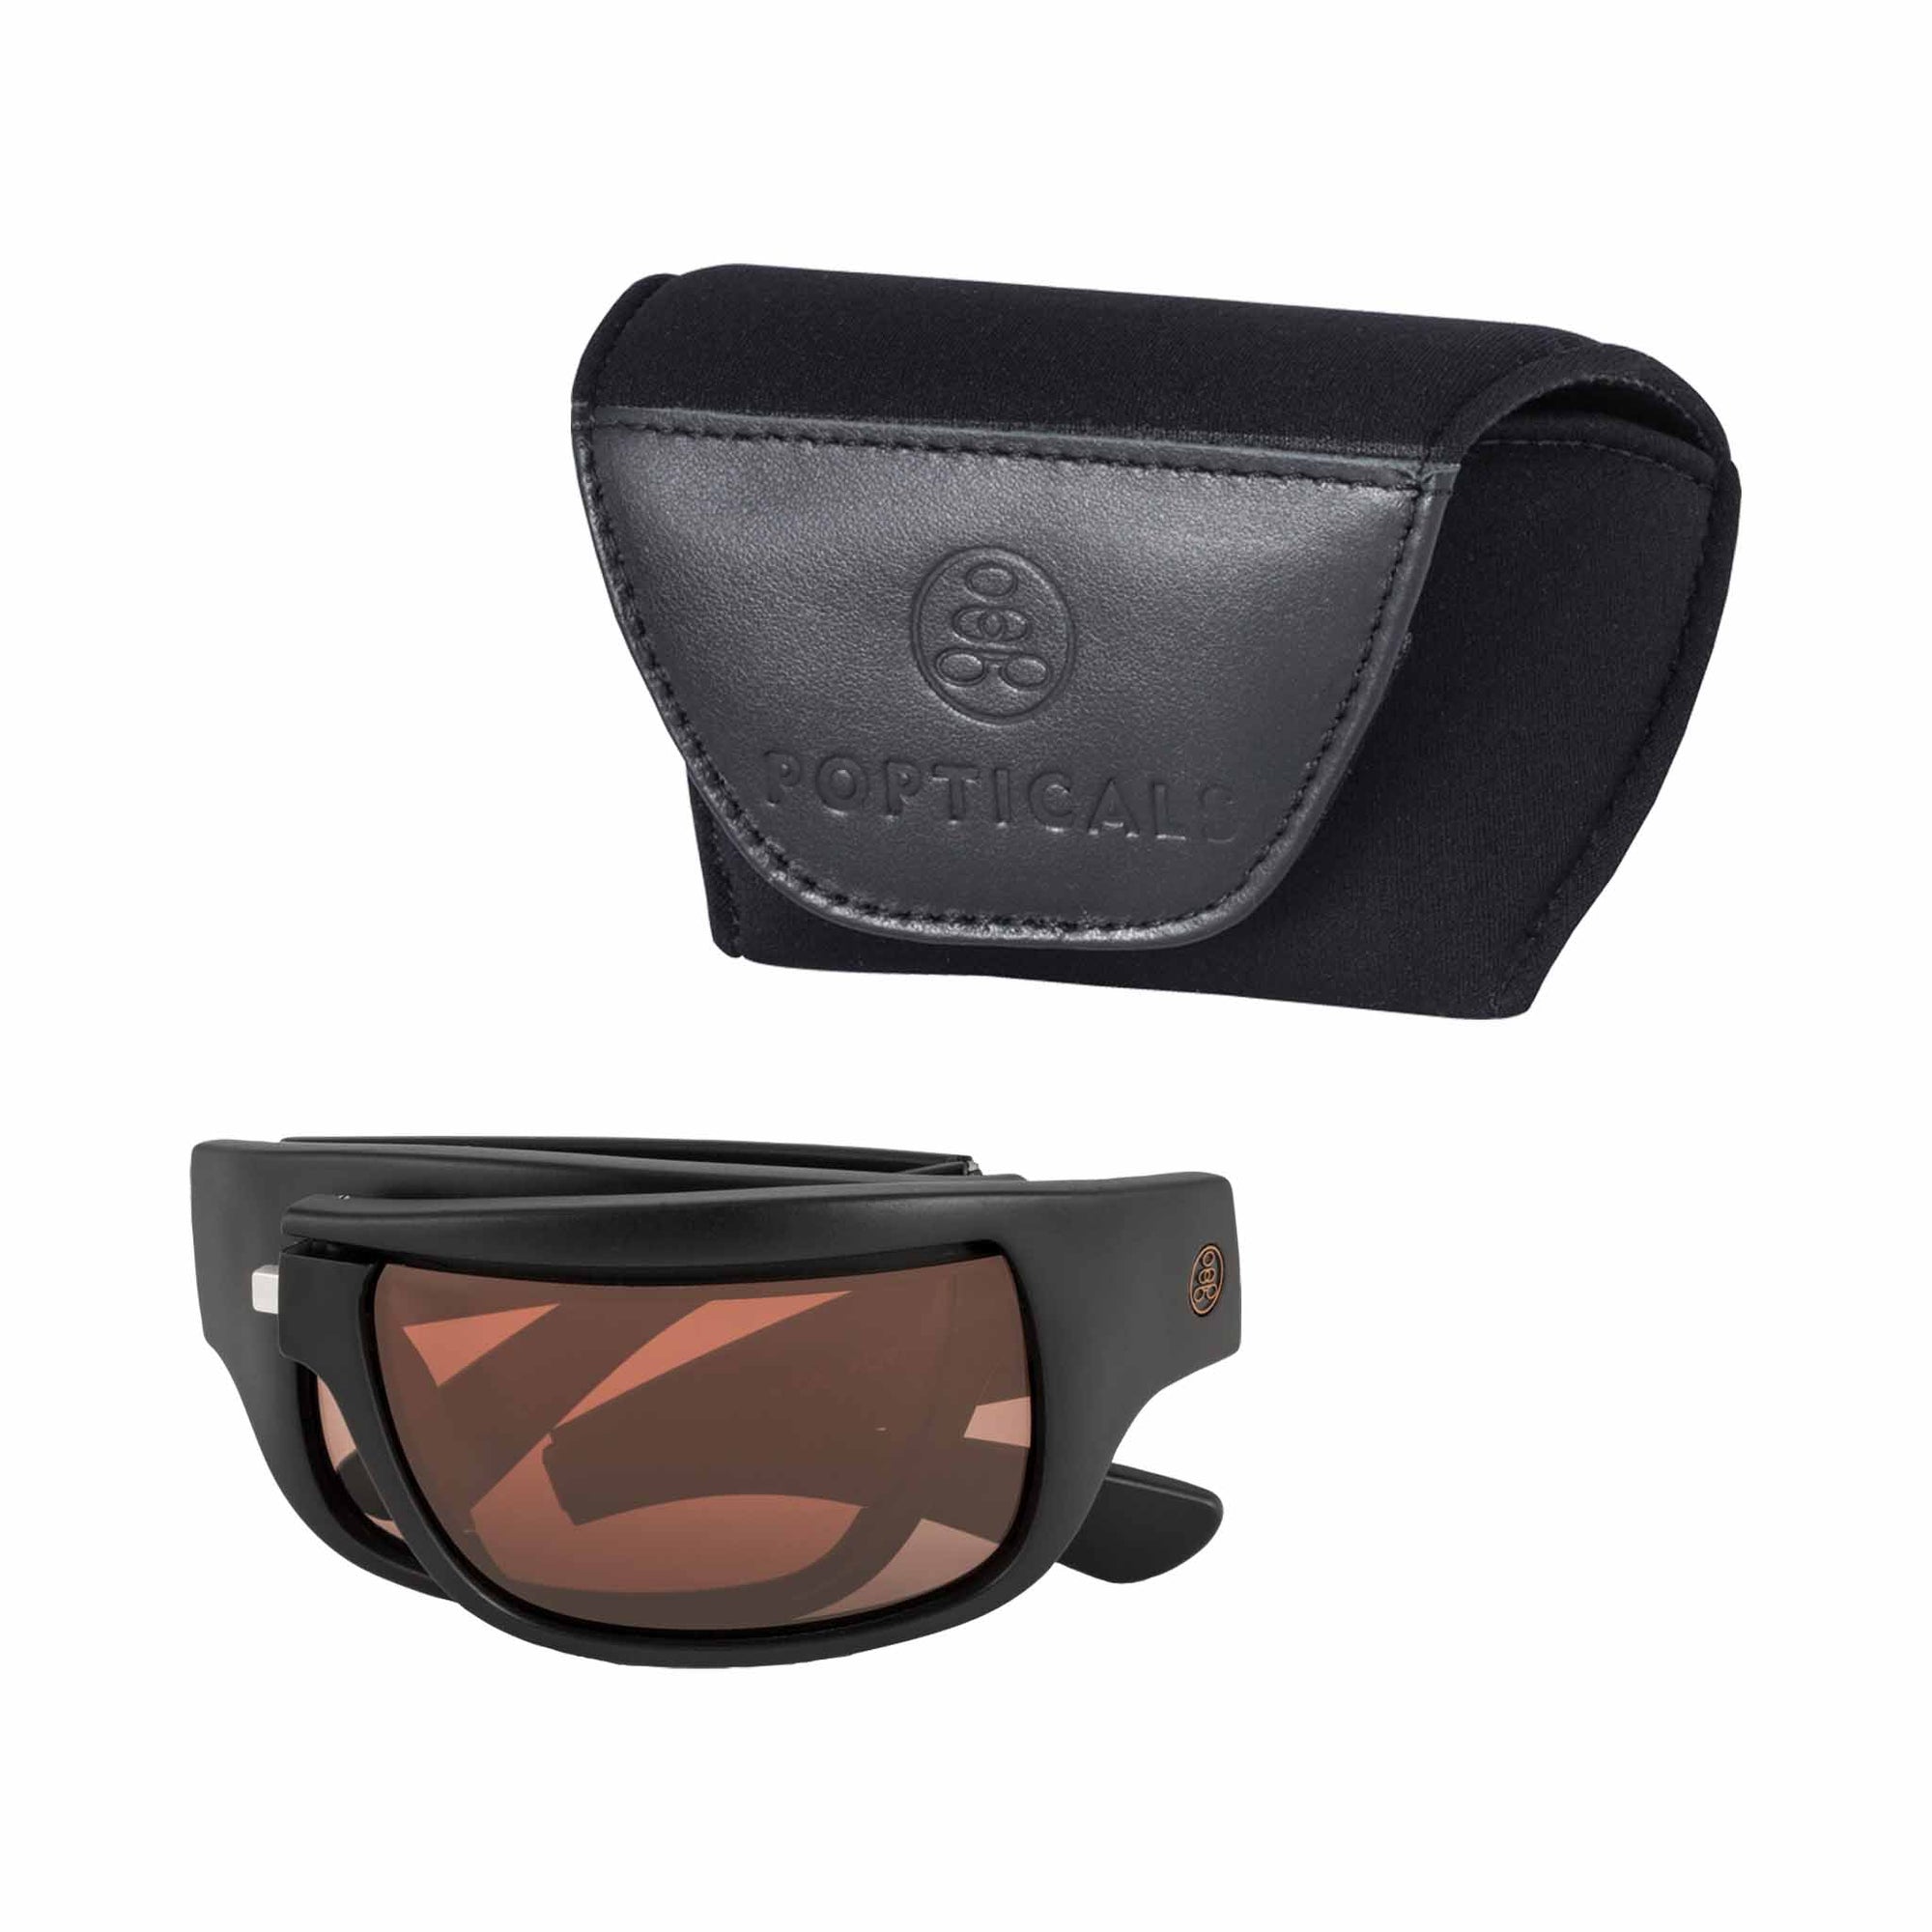 Popticals, Premium Compact Sunglasses, PopH2O, 010070-BMCP, Polarized Sunglasses, Matte Black Frame, Copper Lenses, Case View